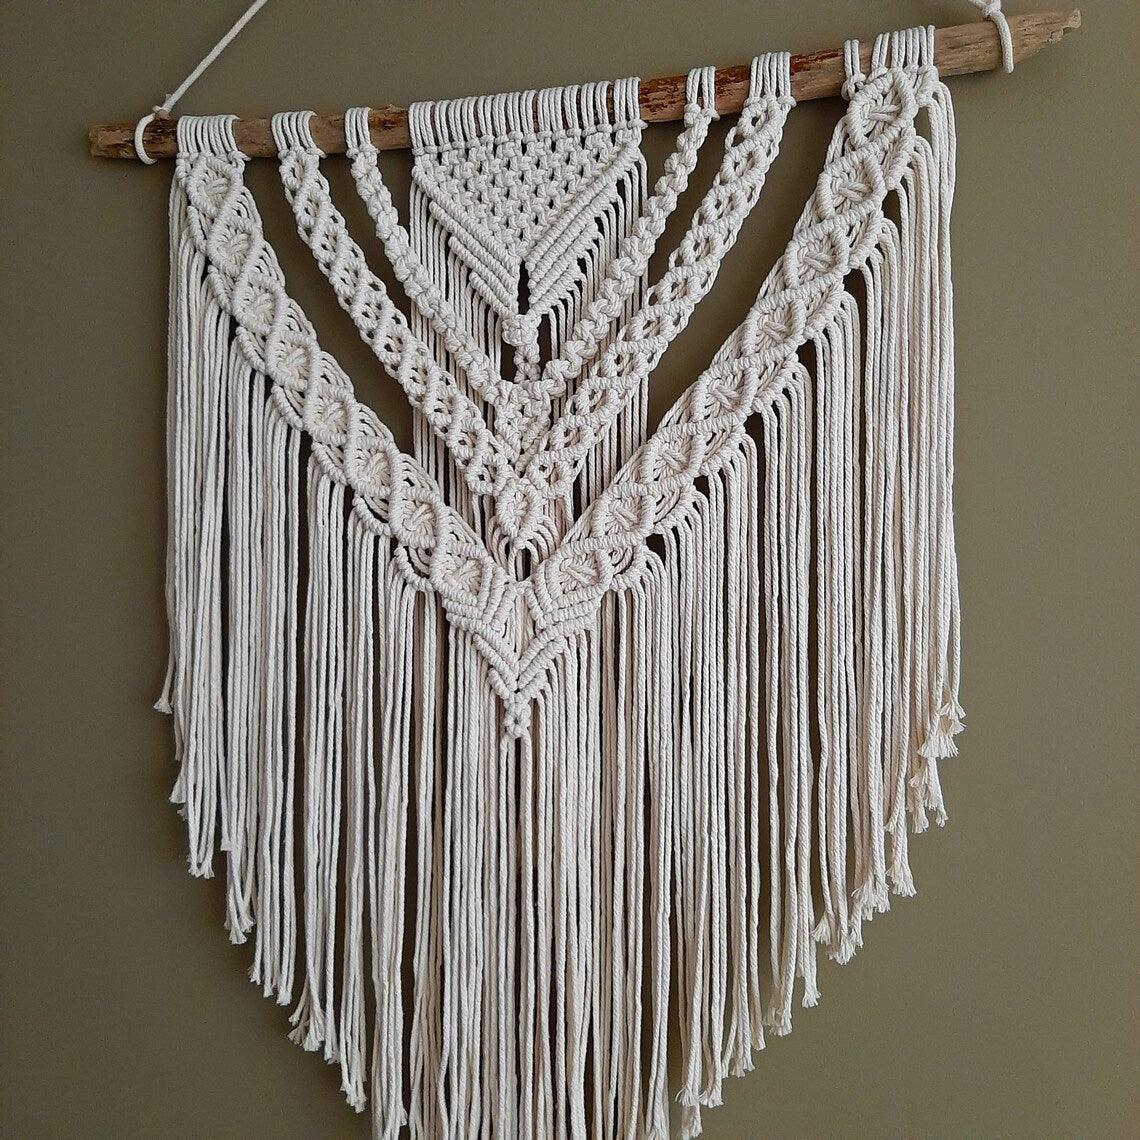 Cosmic Weave Wall Decor - Macrame Wall Hanging - KnittsKnotts